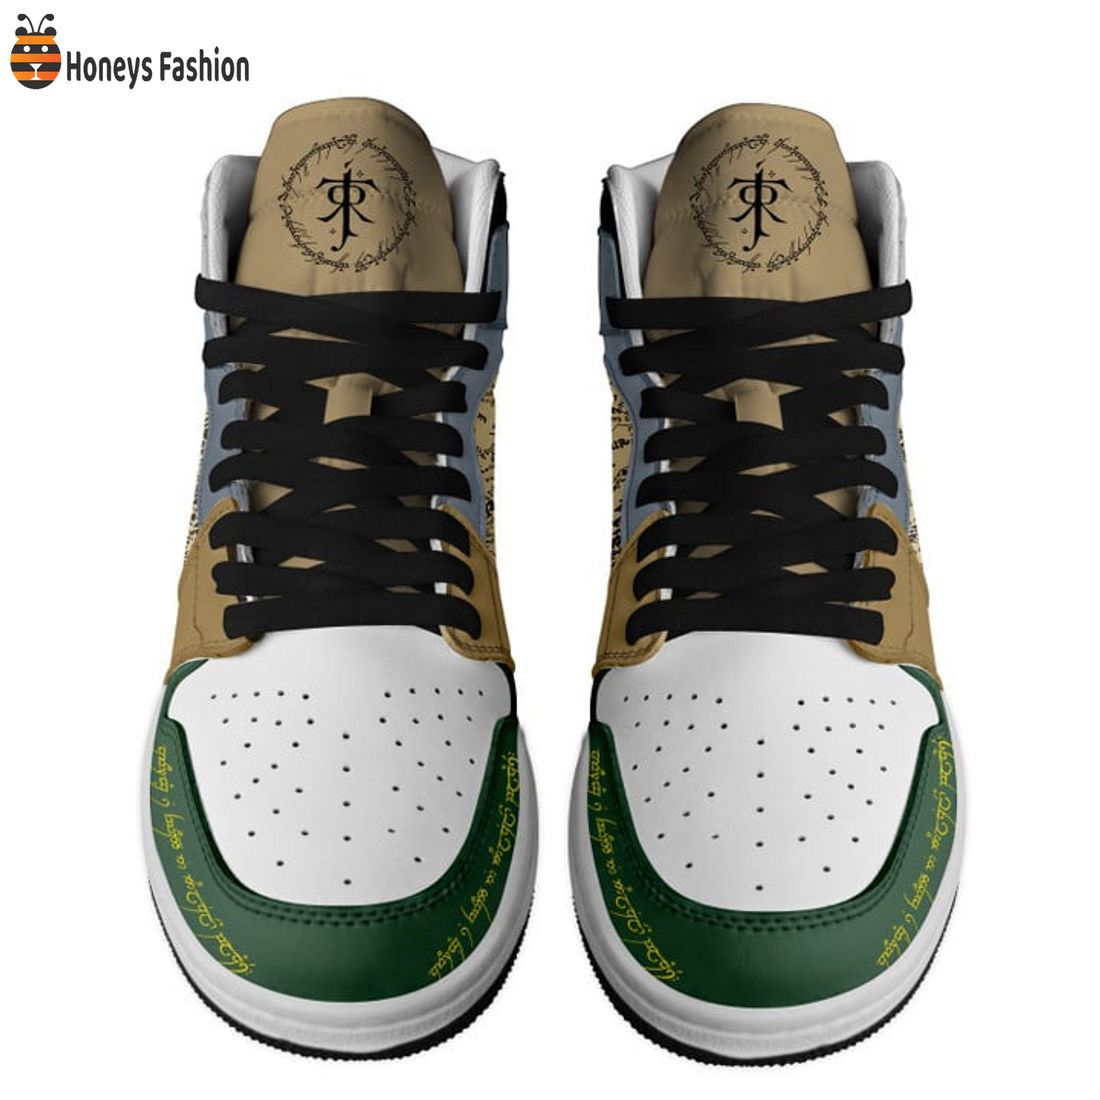 TRENDING LOTR The Rings Of Power Nike Air Jordan 1 High Sneakers